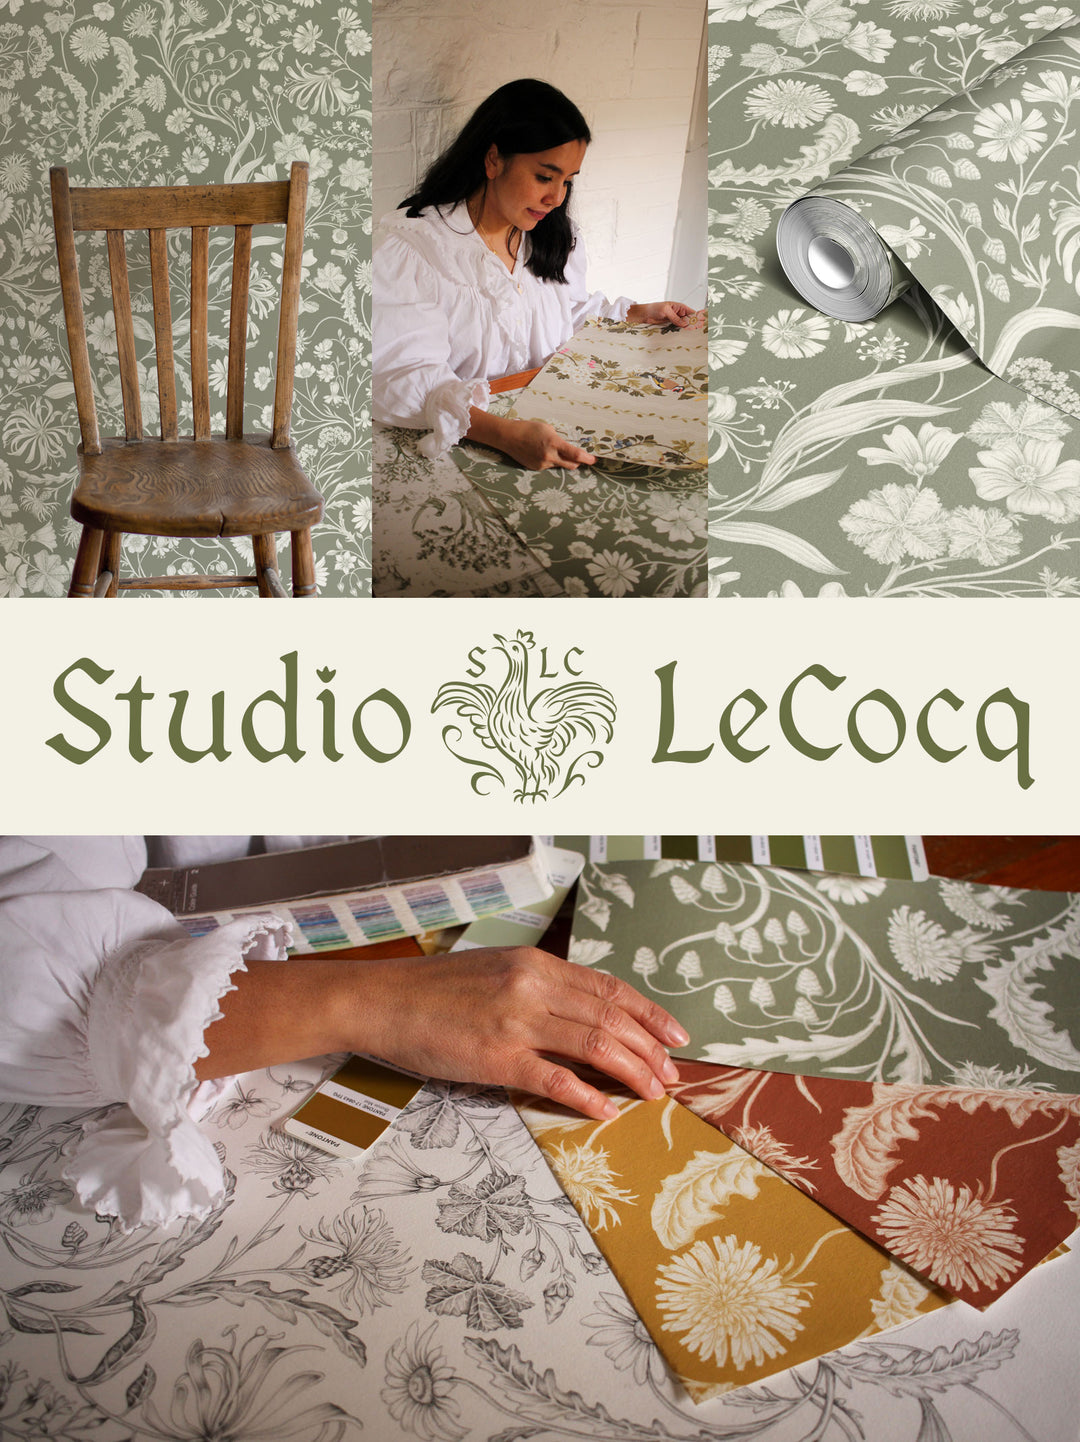 Studio-Le-Cocq-The-Lost-Garden-Botanical-print-wallpaper-tea-green-subtle-cream-print-floral-country-style-cottage-wallpaper-pattern